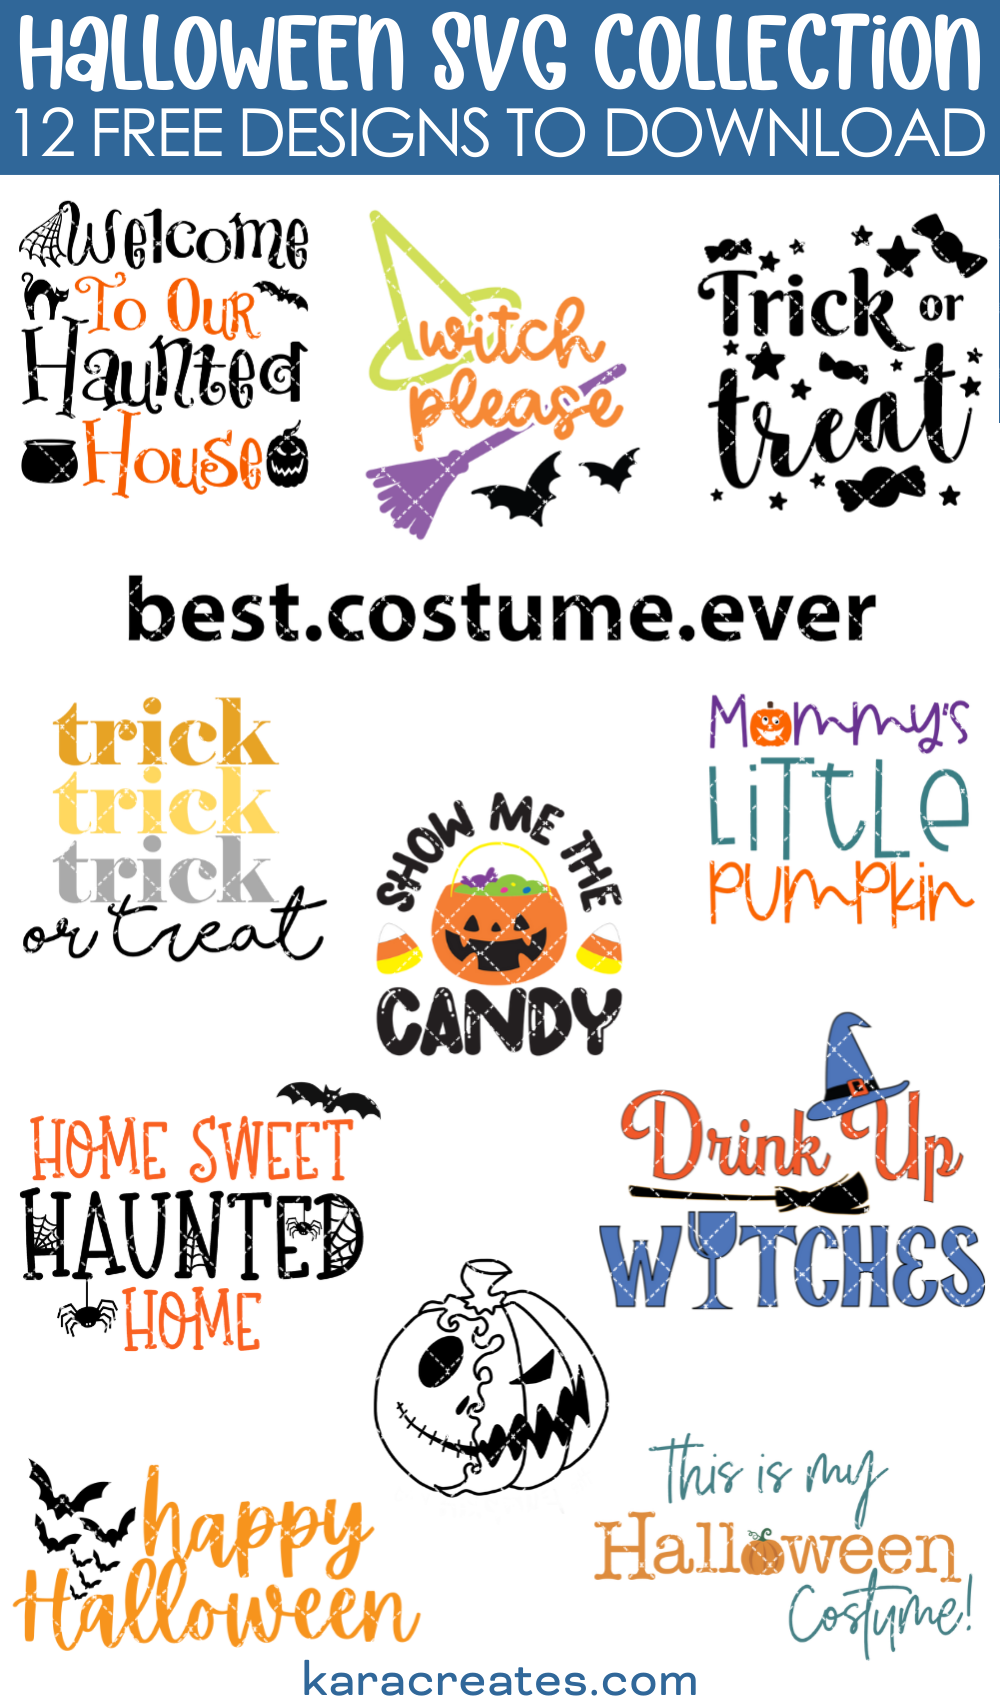 12 Free Halloween SVG Cut Files